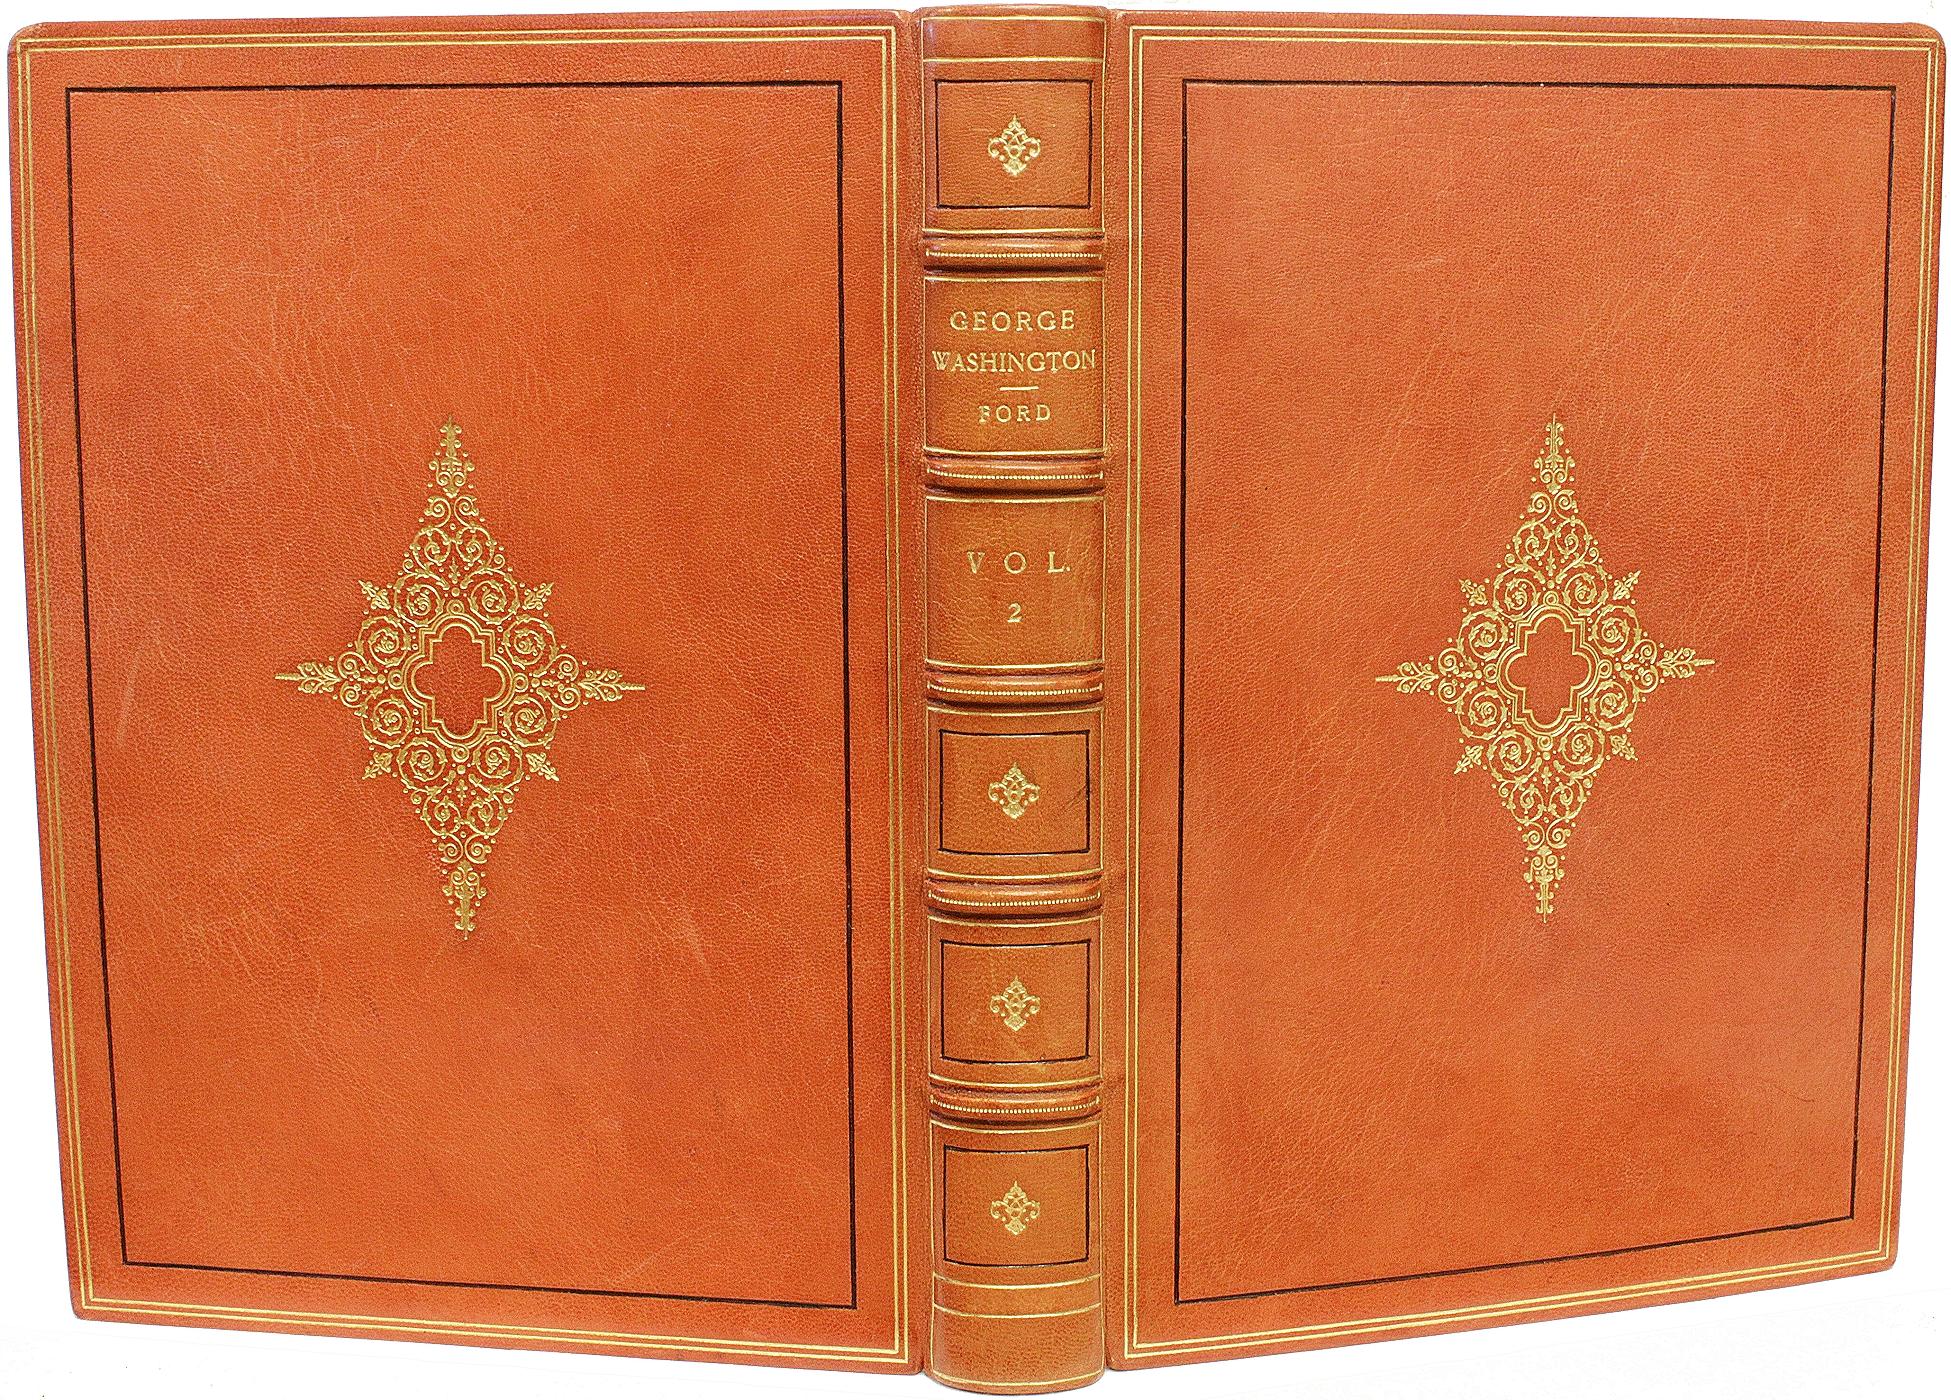 AUTHOR: FORD, Worthington Chauncey. 

TITLE: George Washington.

PUBLISHER: NY: Goupil & Co., 1900.

DESCRIPTION: THE MEMORIAL EDITION. 2 vols., 10-1/8